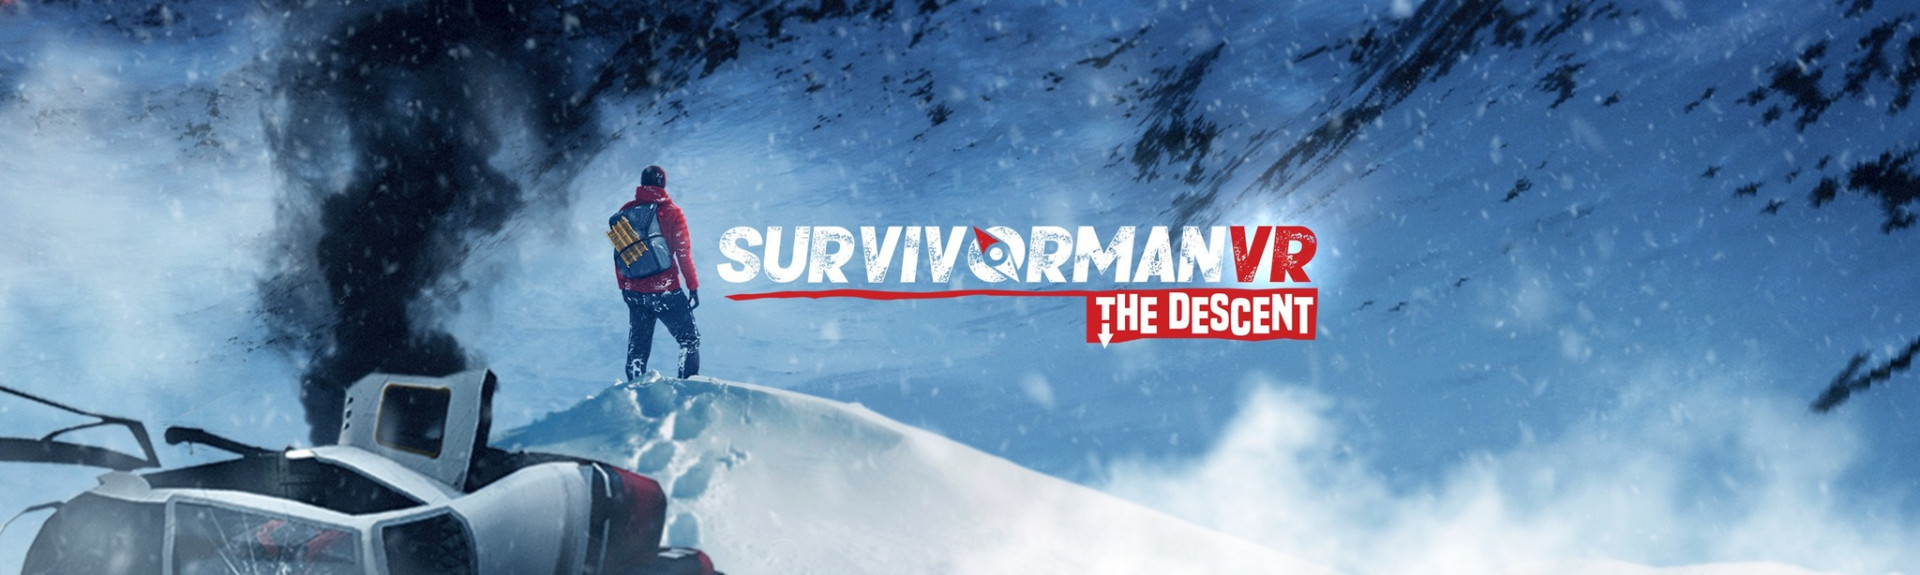 Survivorman VR: The Descent - ANÁLISIS